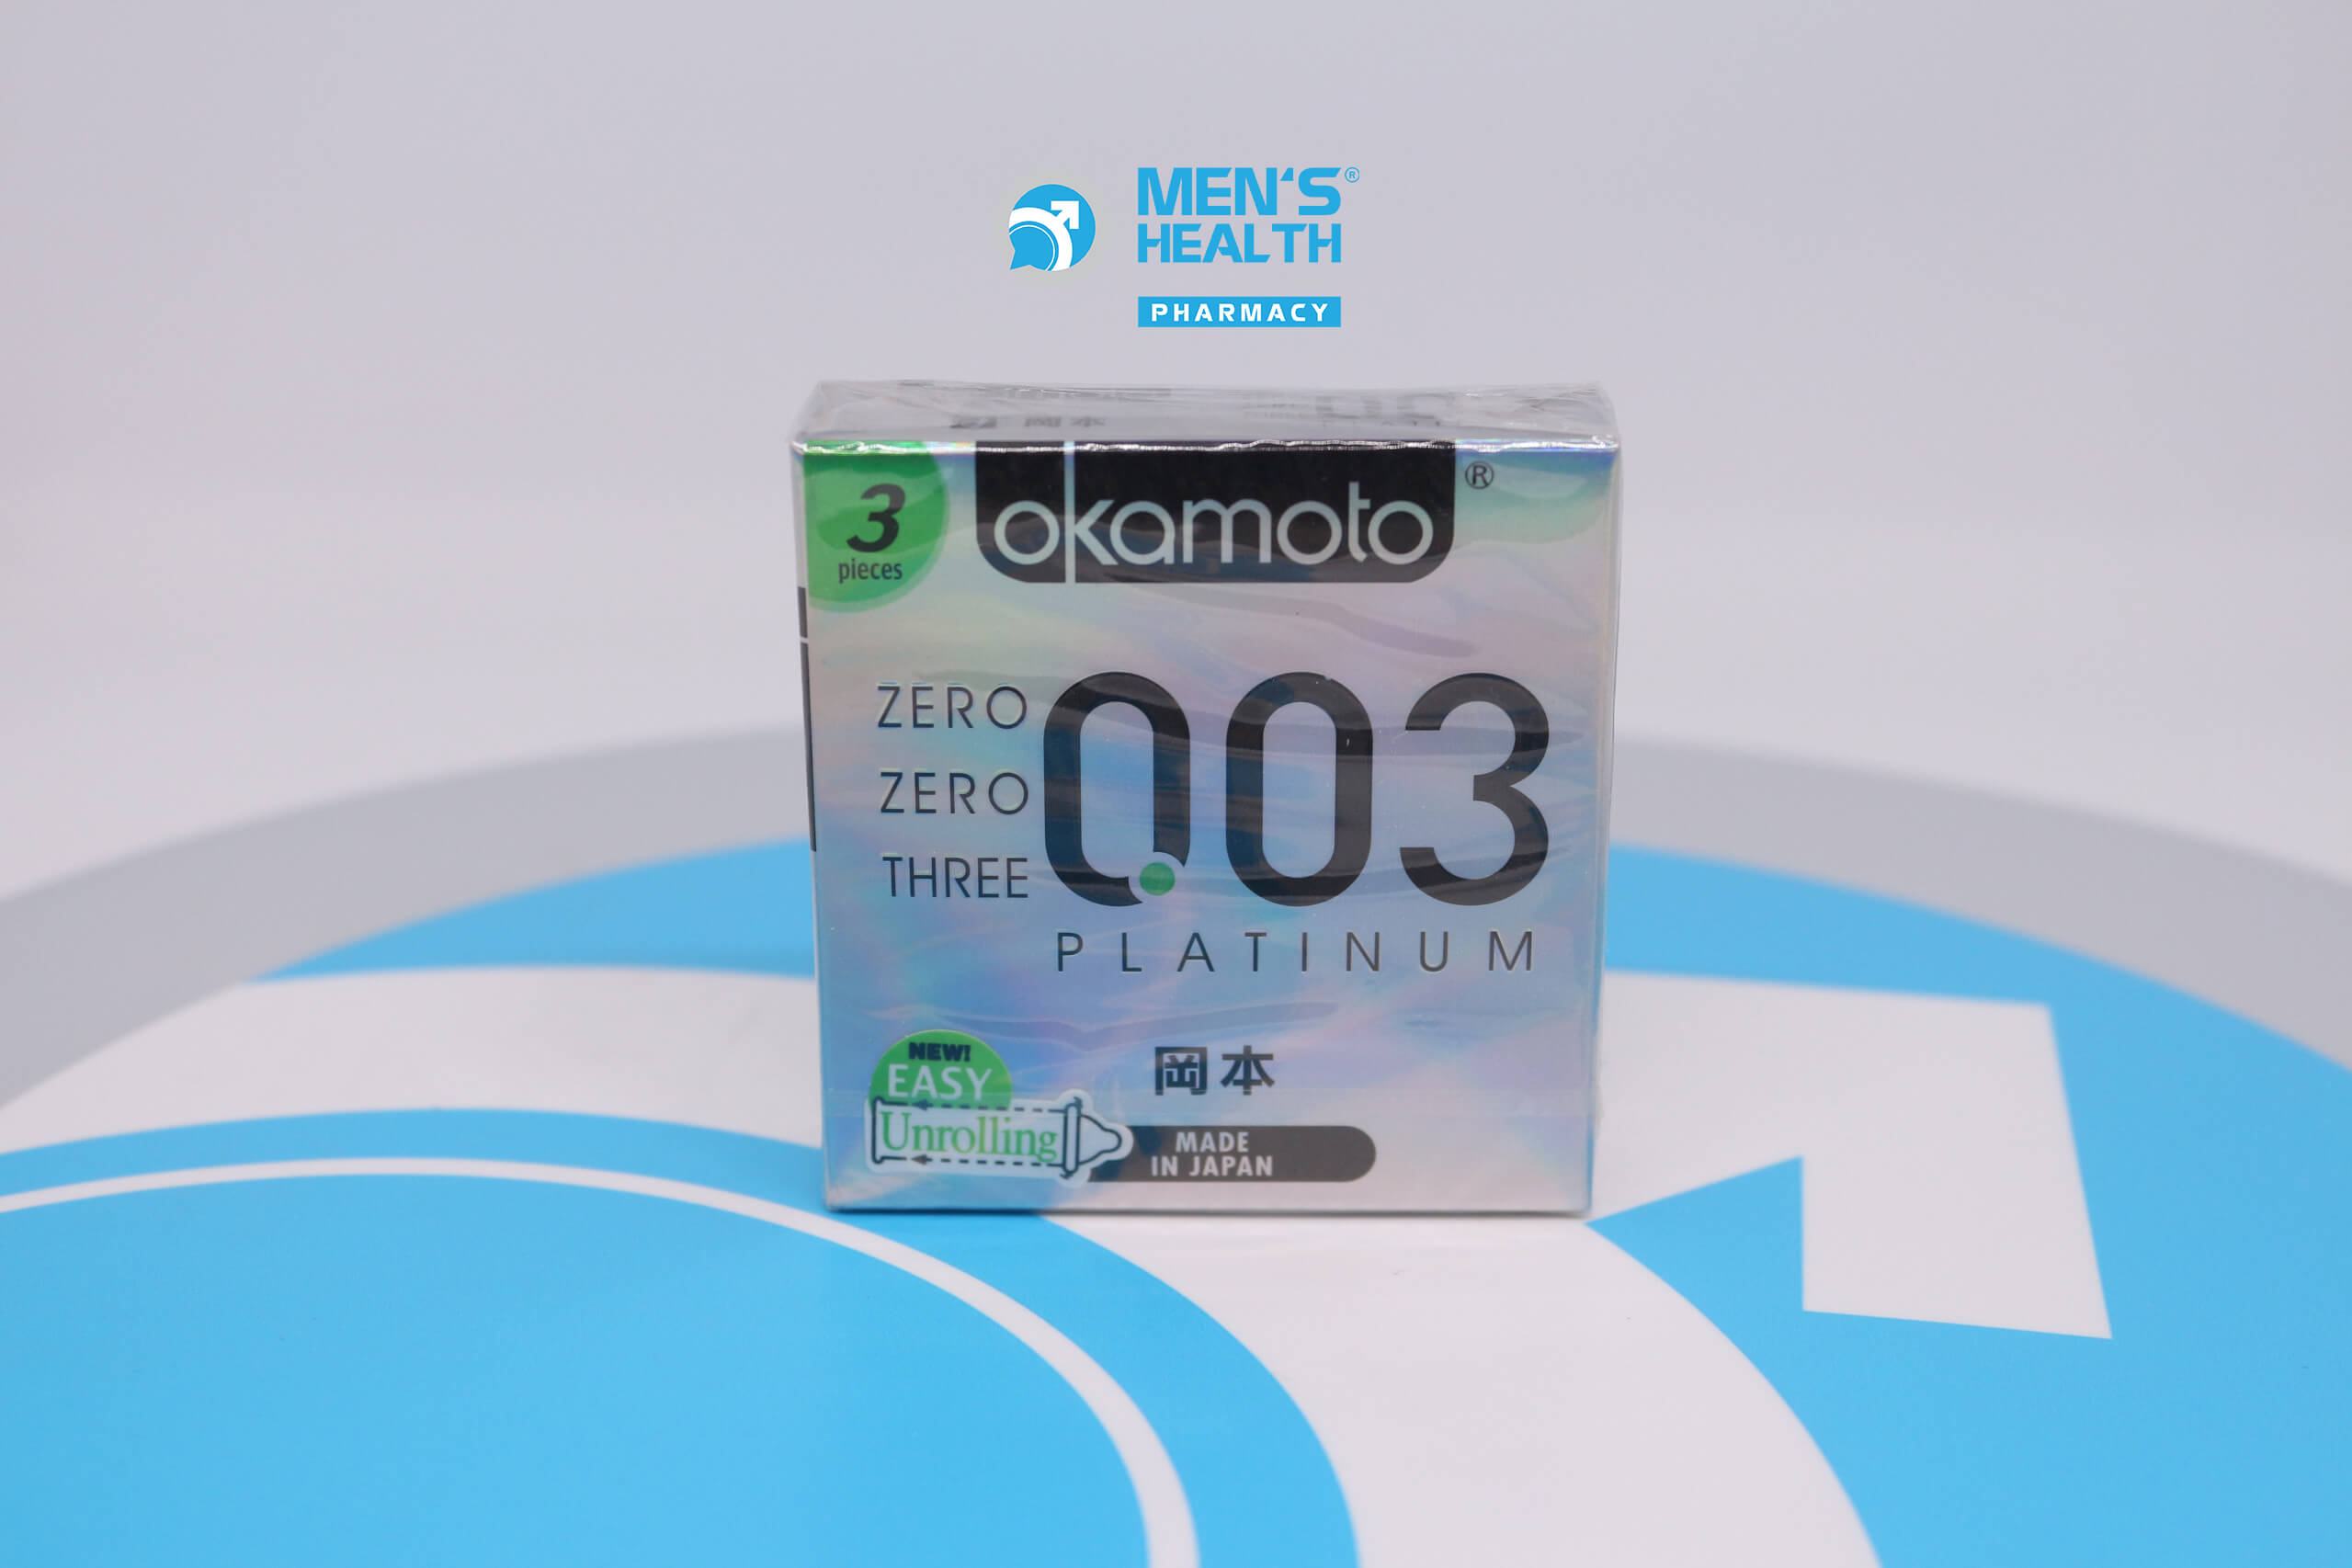 Bao cao su siêu mỏng Okamoto 0.03 Real- FIT